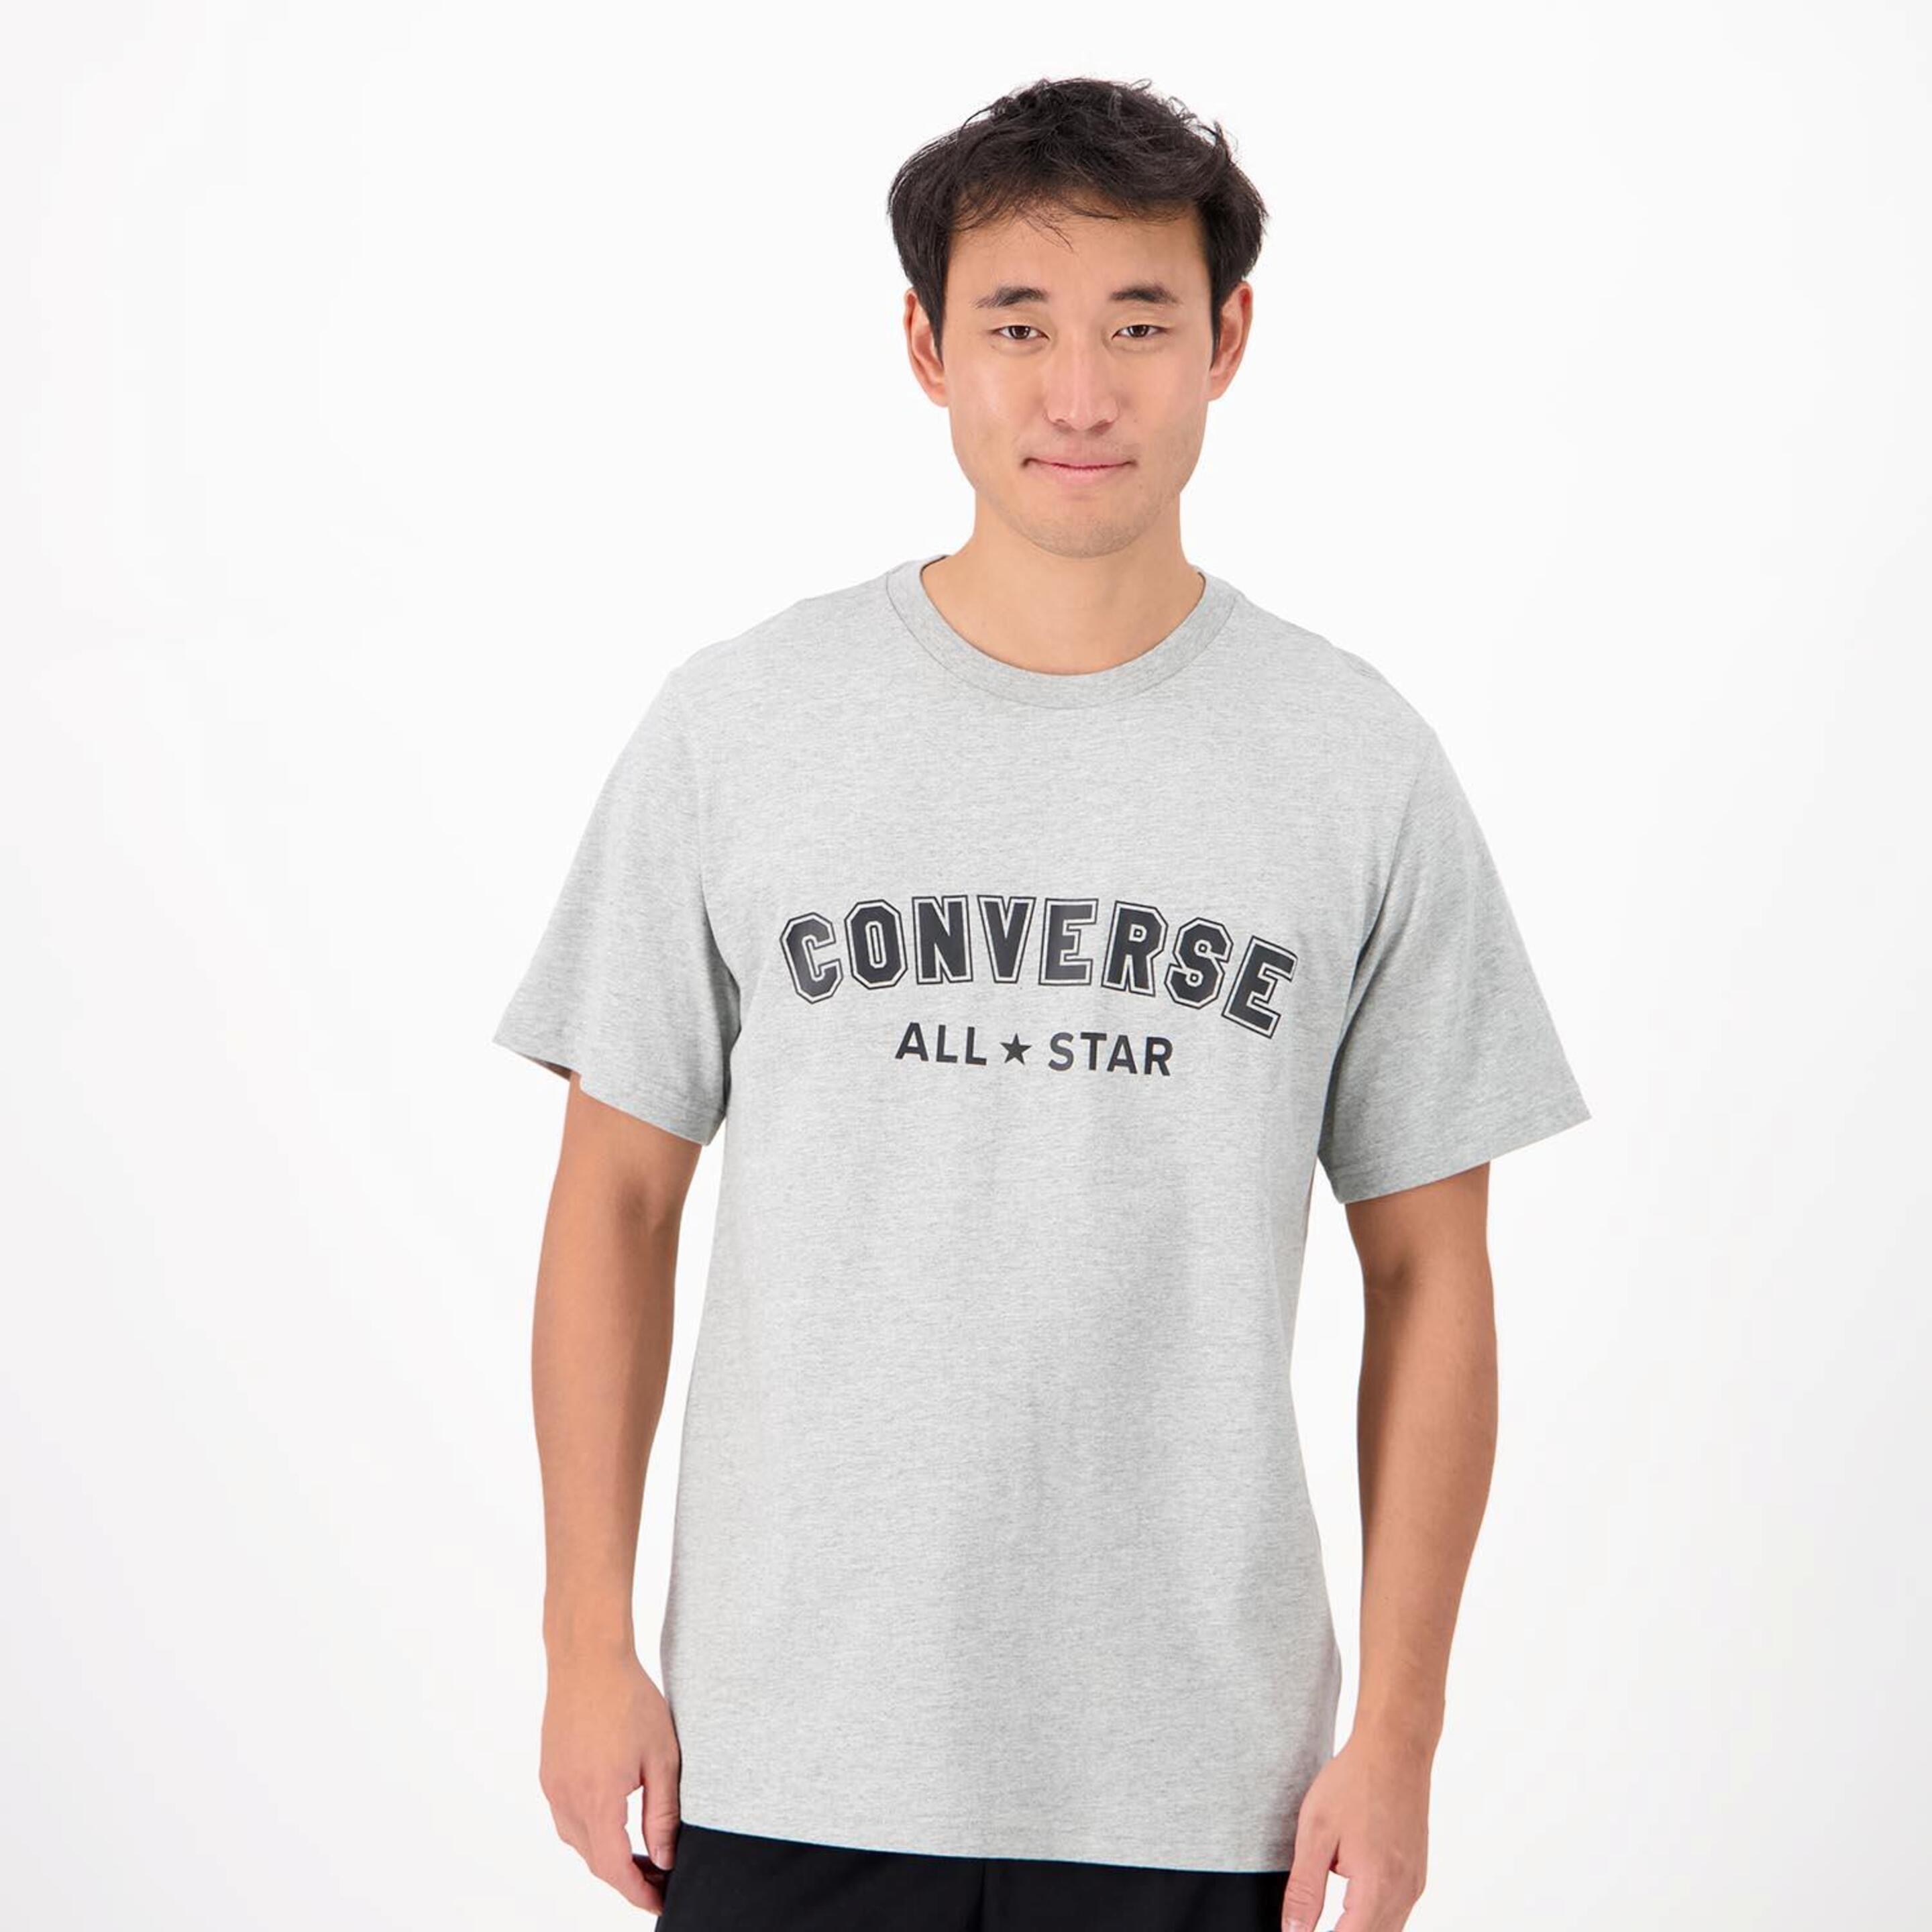 Converse All Star - gris - Camiseta Hombre